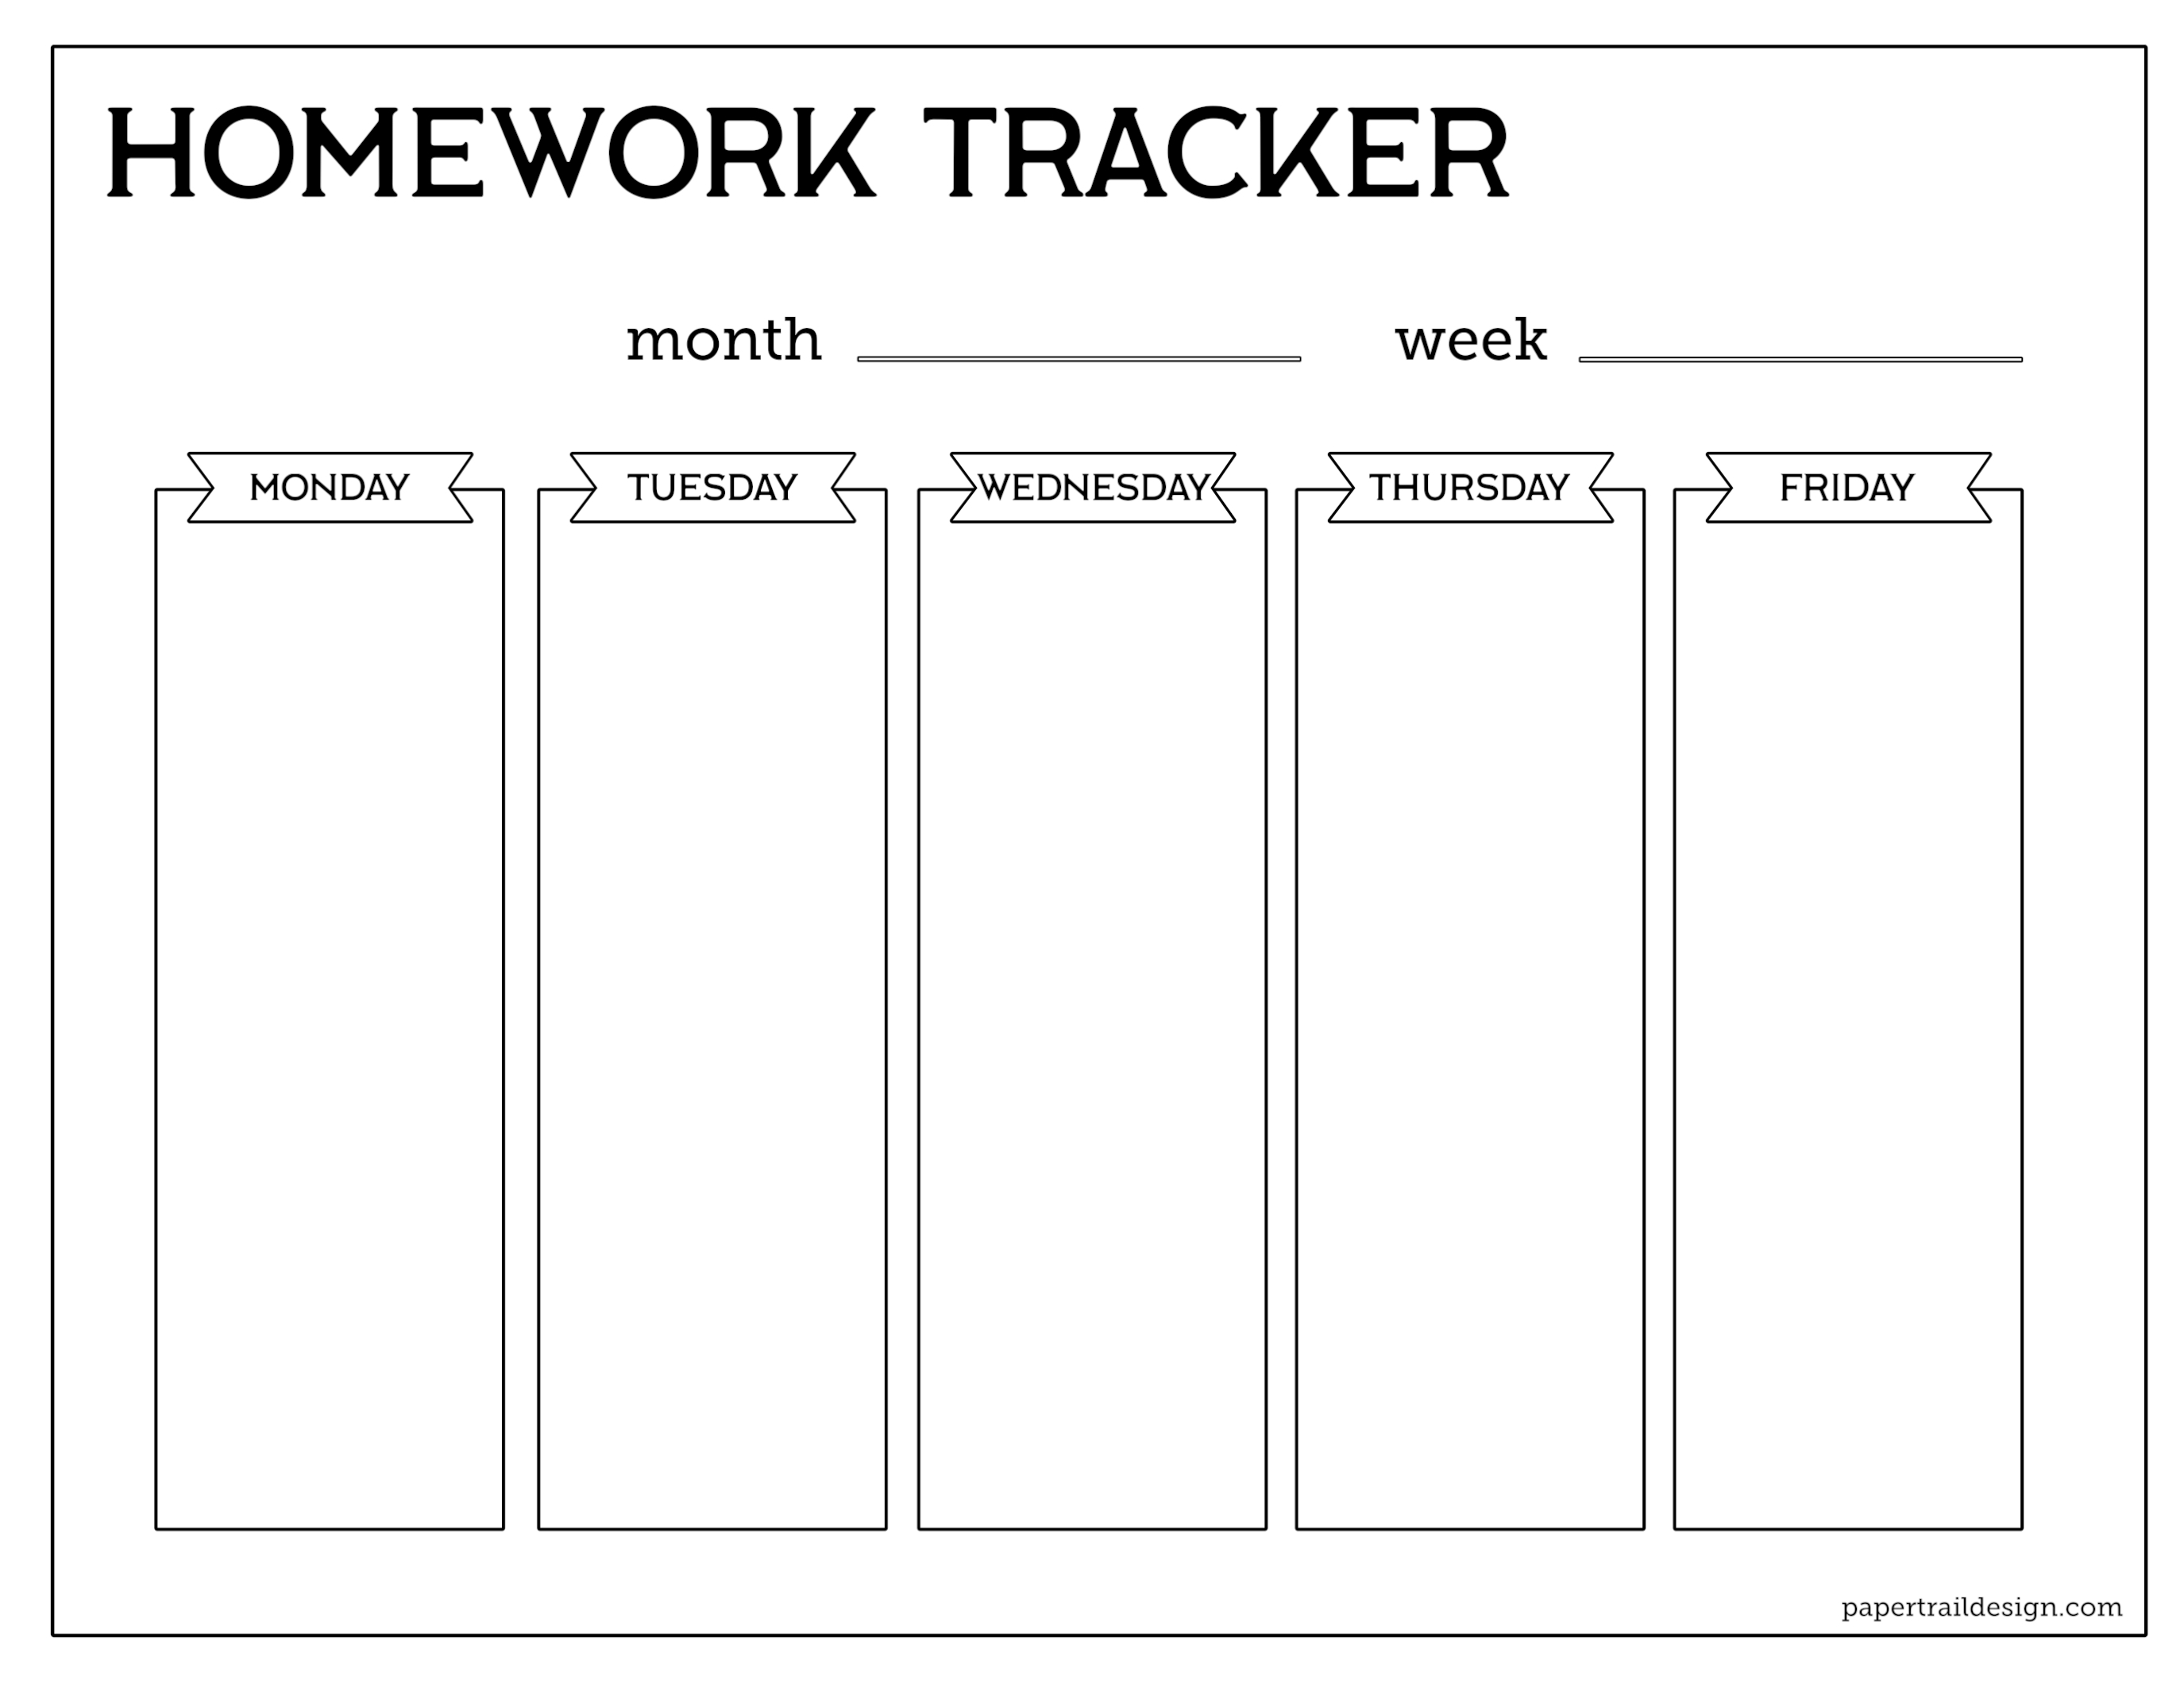 Free Printable Student Homework Planner Template - Paper Trail Design